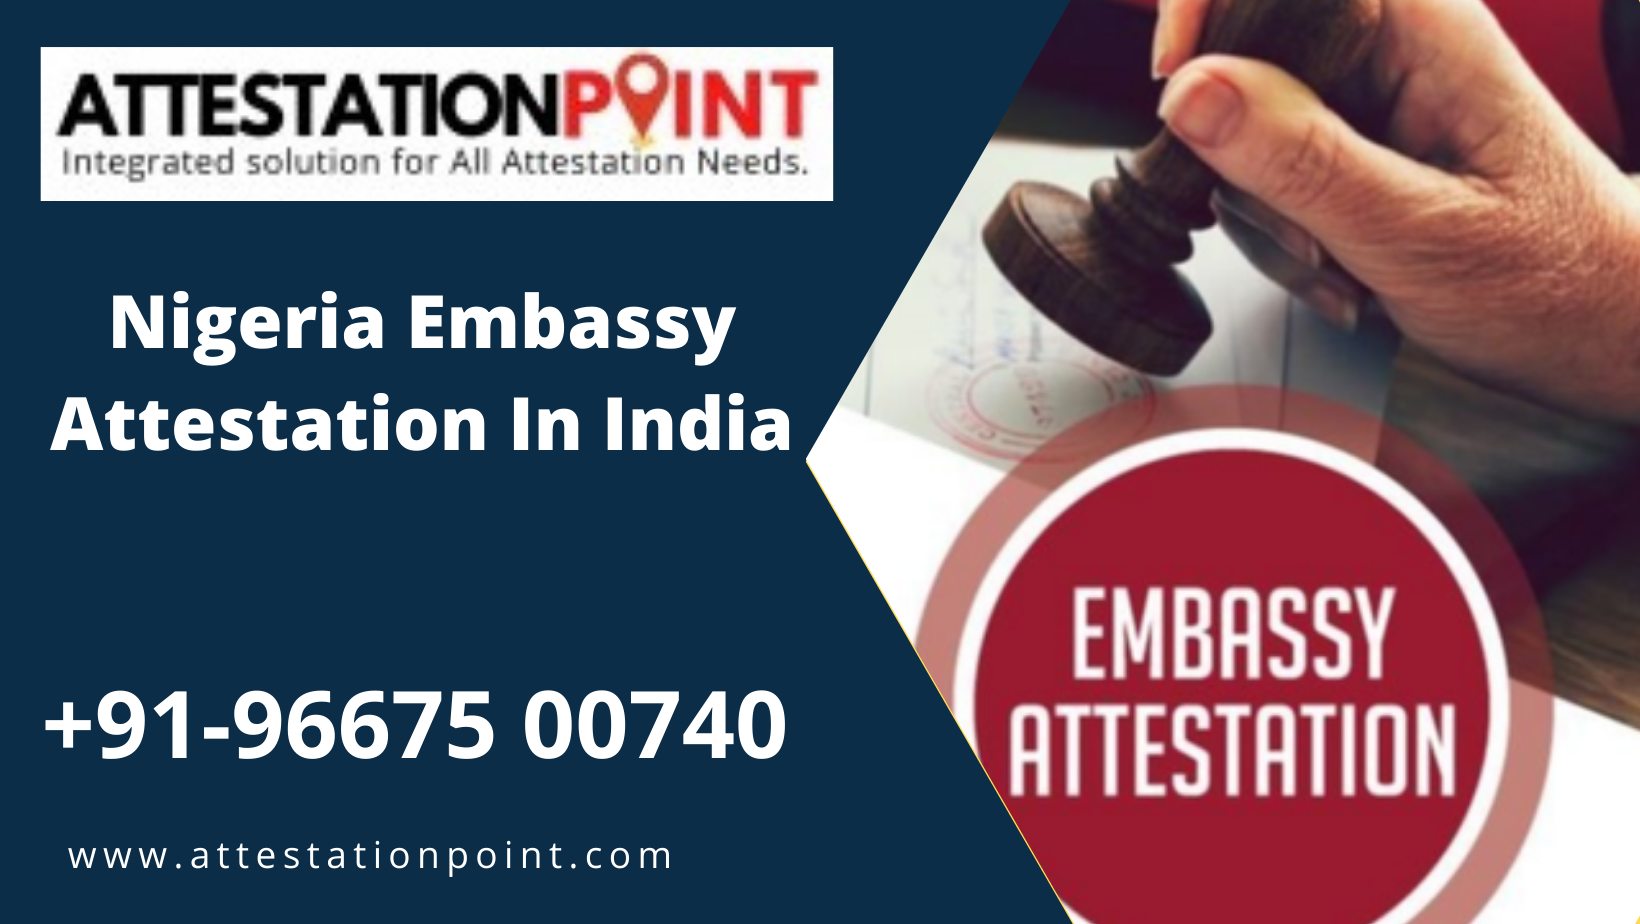 Nigeria Embassy Attestation In India